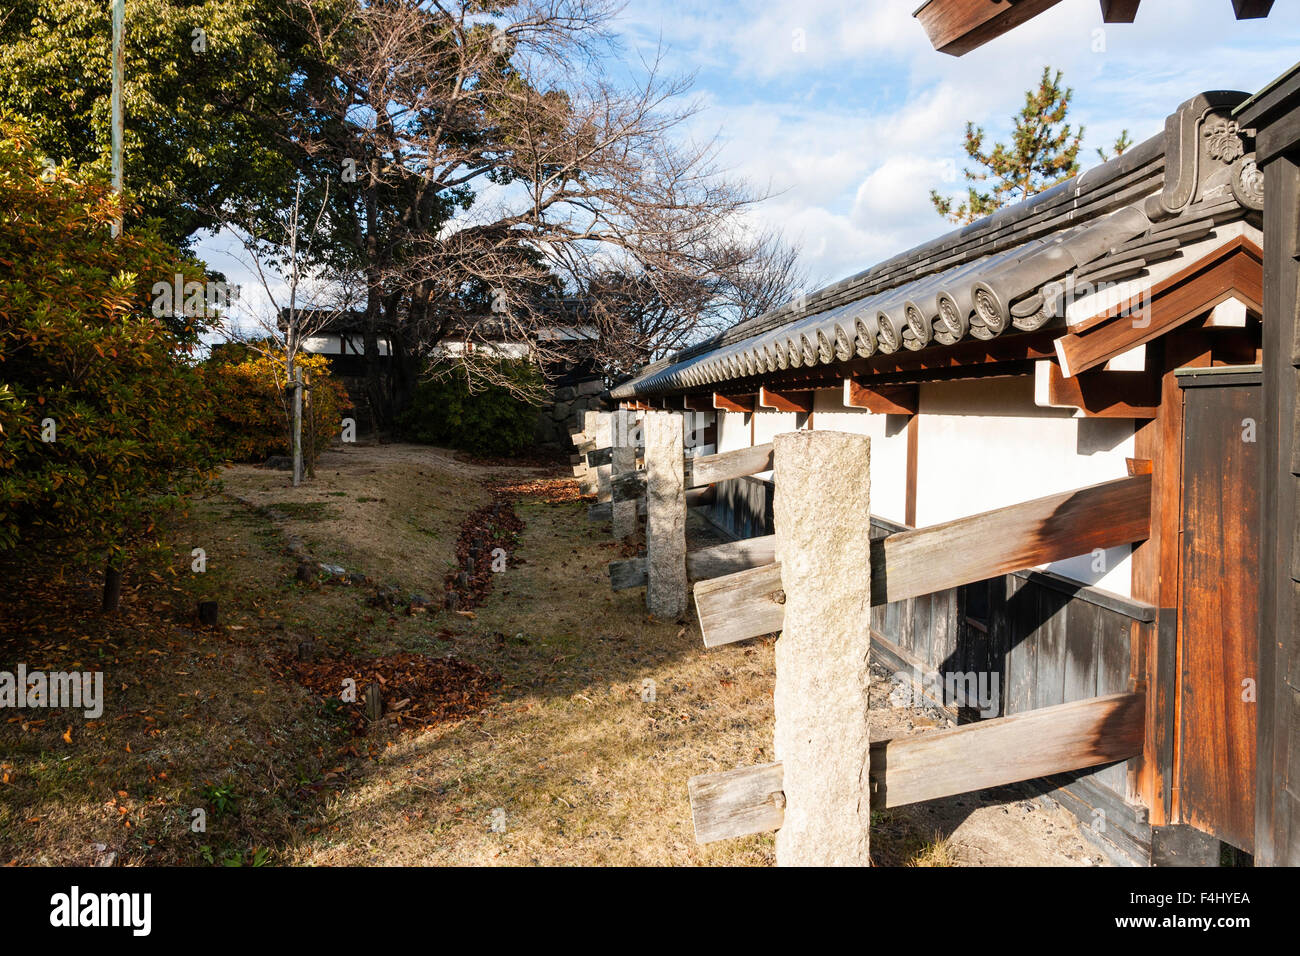 Japan, Yamato-Koriyama schloss. Palisade, Wall von Ote Osten Ecke Revolver, yagura. Holz- gekrönt mit weißem Putz, dobei Stil. Ishizama unterstützt. Stockfoto